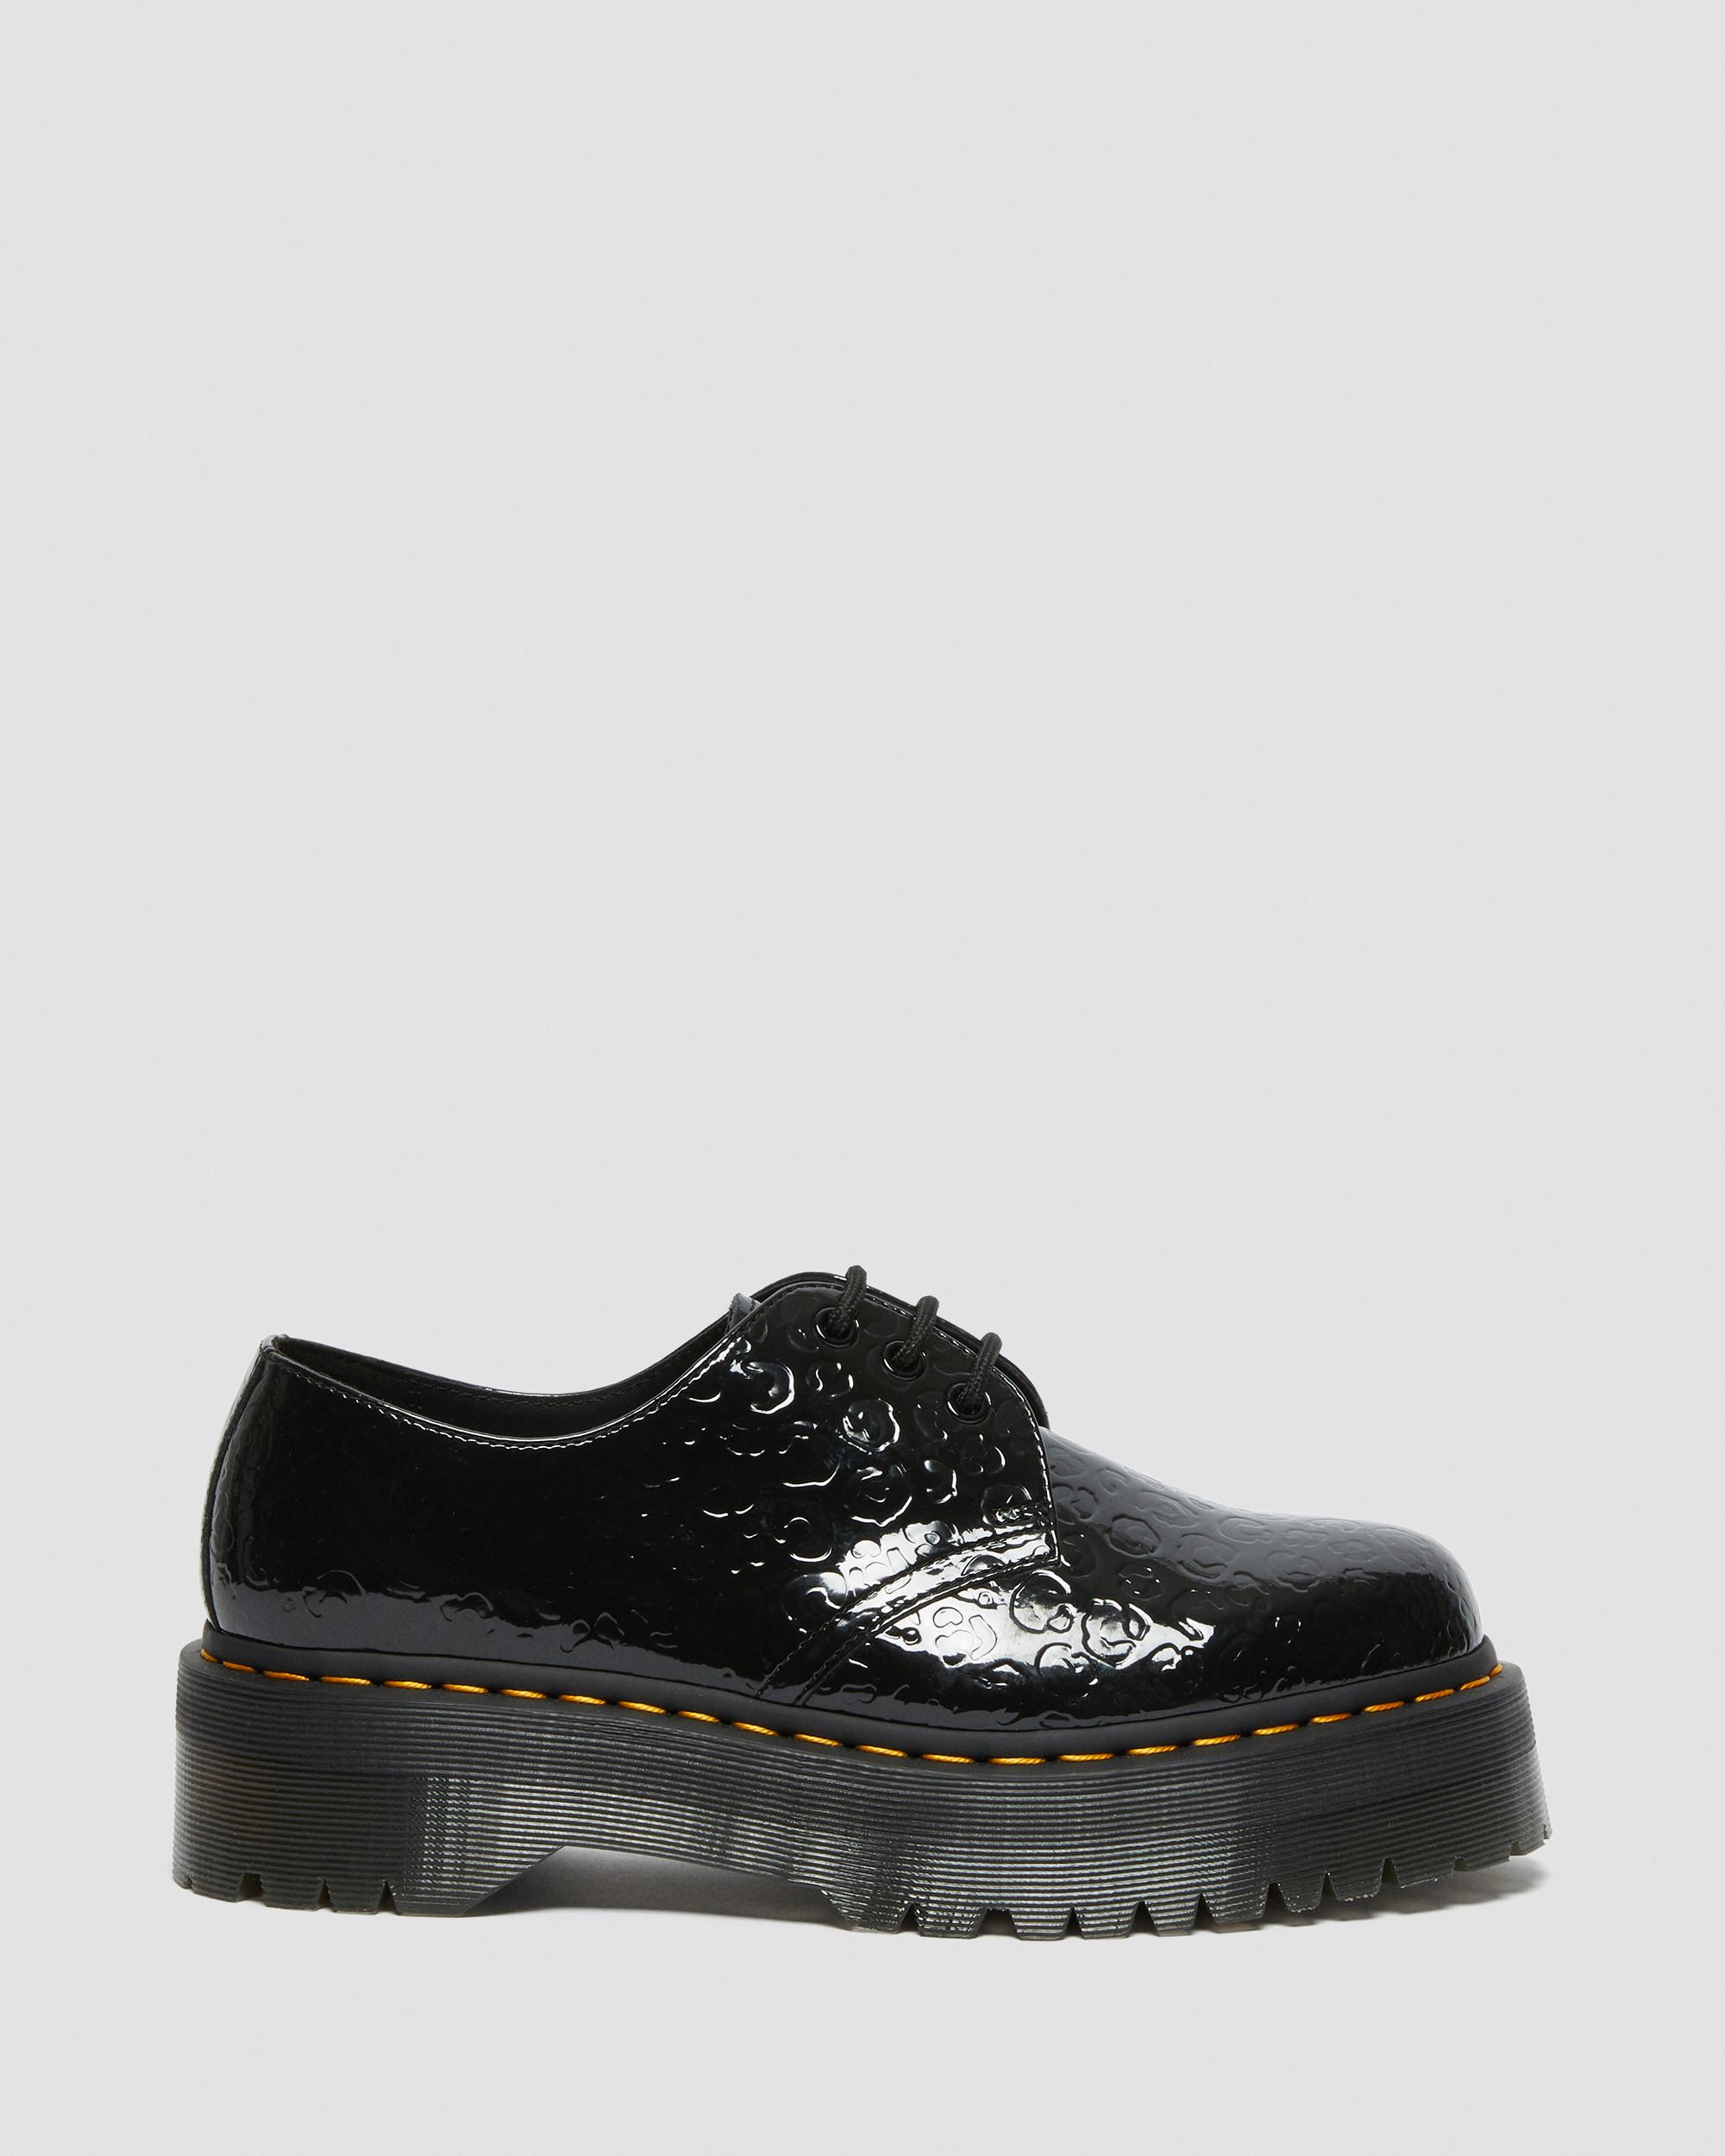 1461 Leopard Emboss Patent Leather Platform Shoes, Black | Dr. Martens